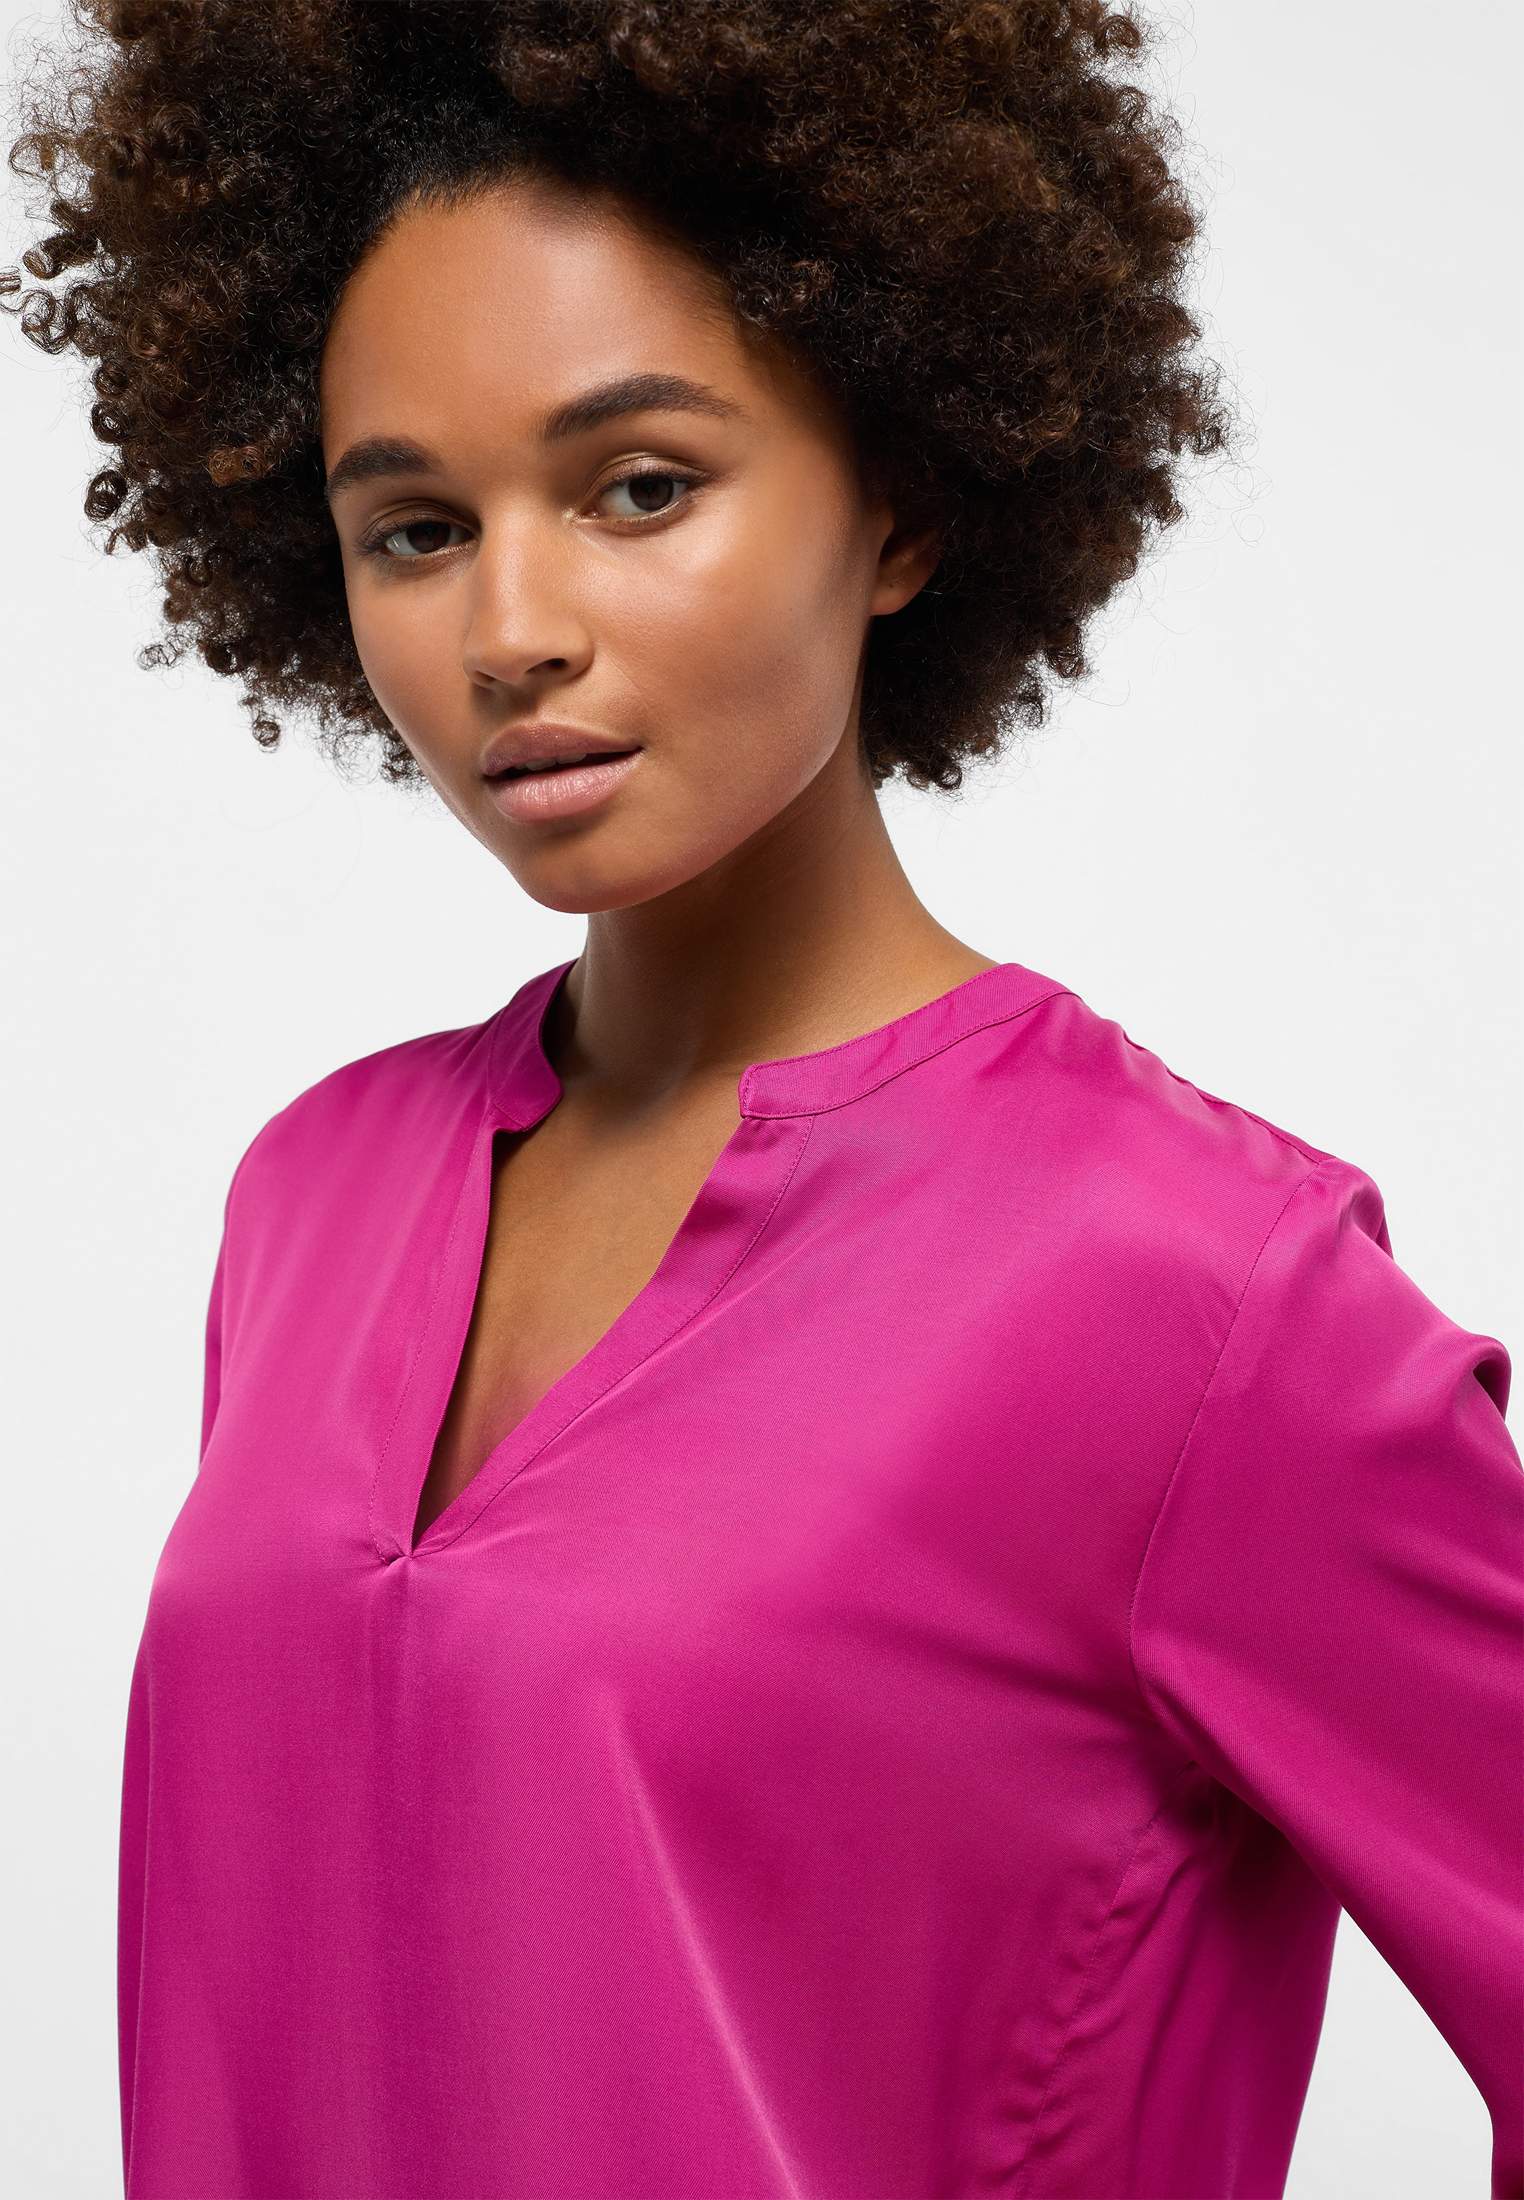 Viscose Shirt Bluse in vibrant Langarm vibrant pink | | | | 2BL00329-15-31-34-1/1 34 pink unifarben